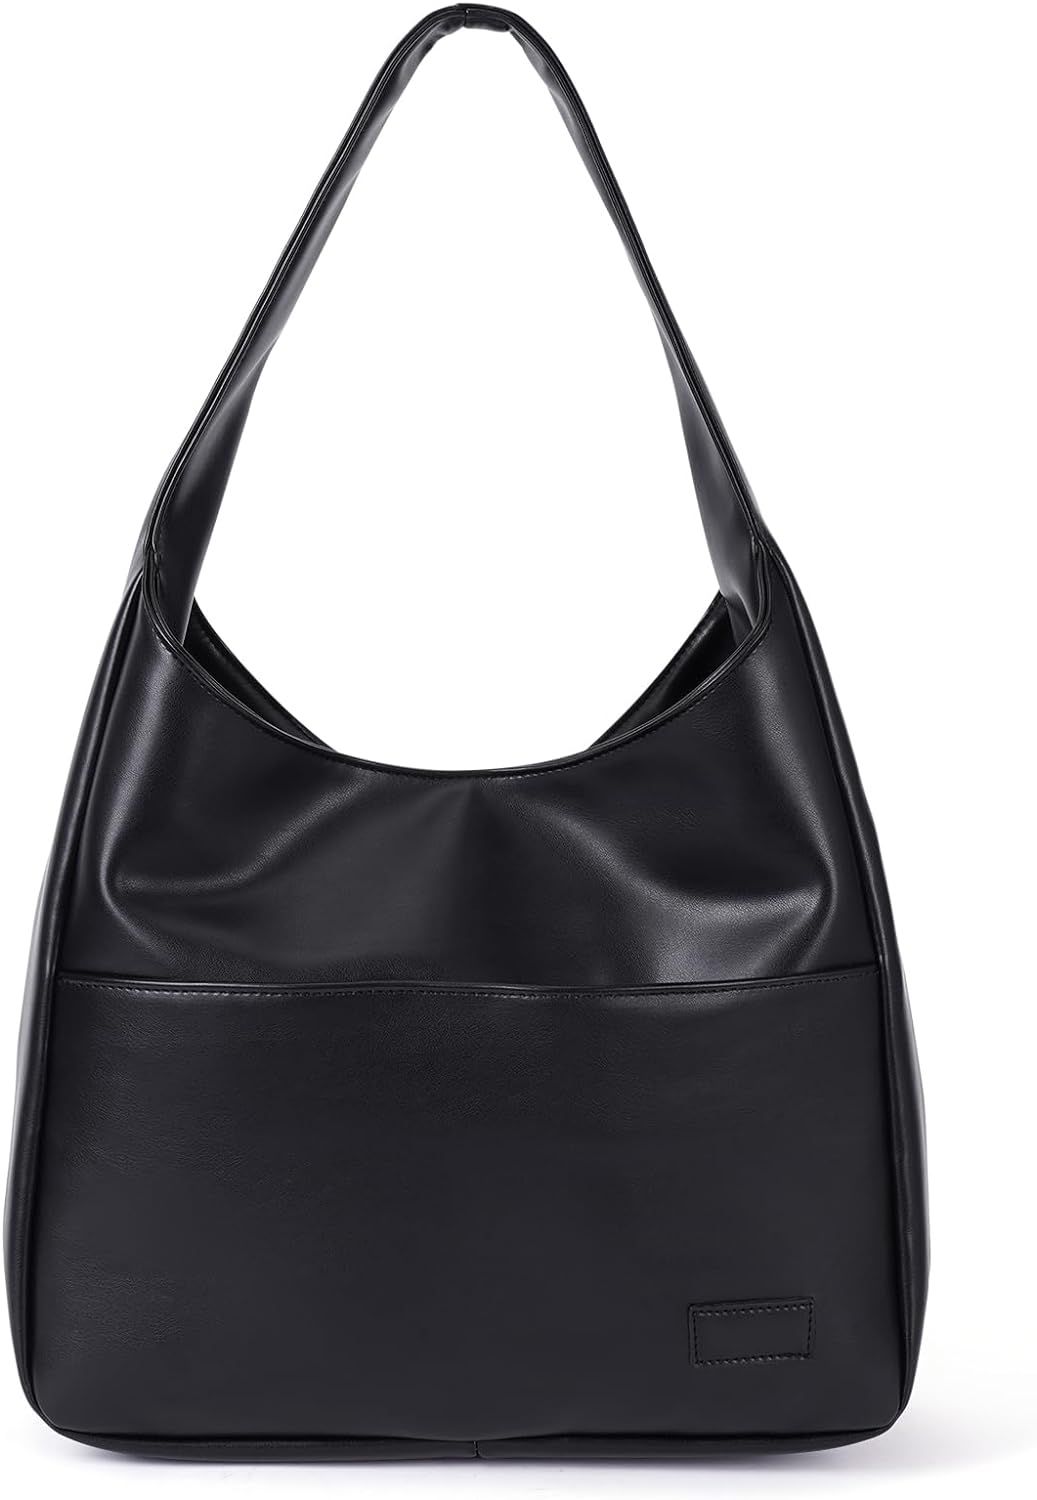 ACUYE Faux Leather Tote Bag Shoulder Bag for Women, Large Leather Tote Handbag Hobo Handbag Work ... | Amazon (UK)